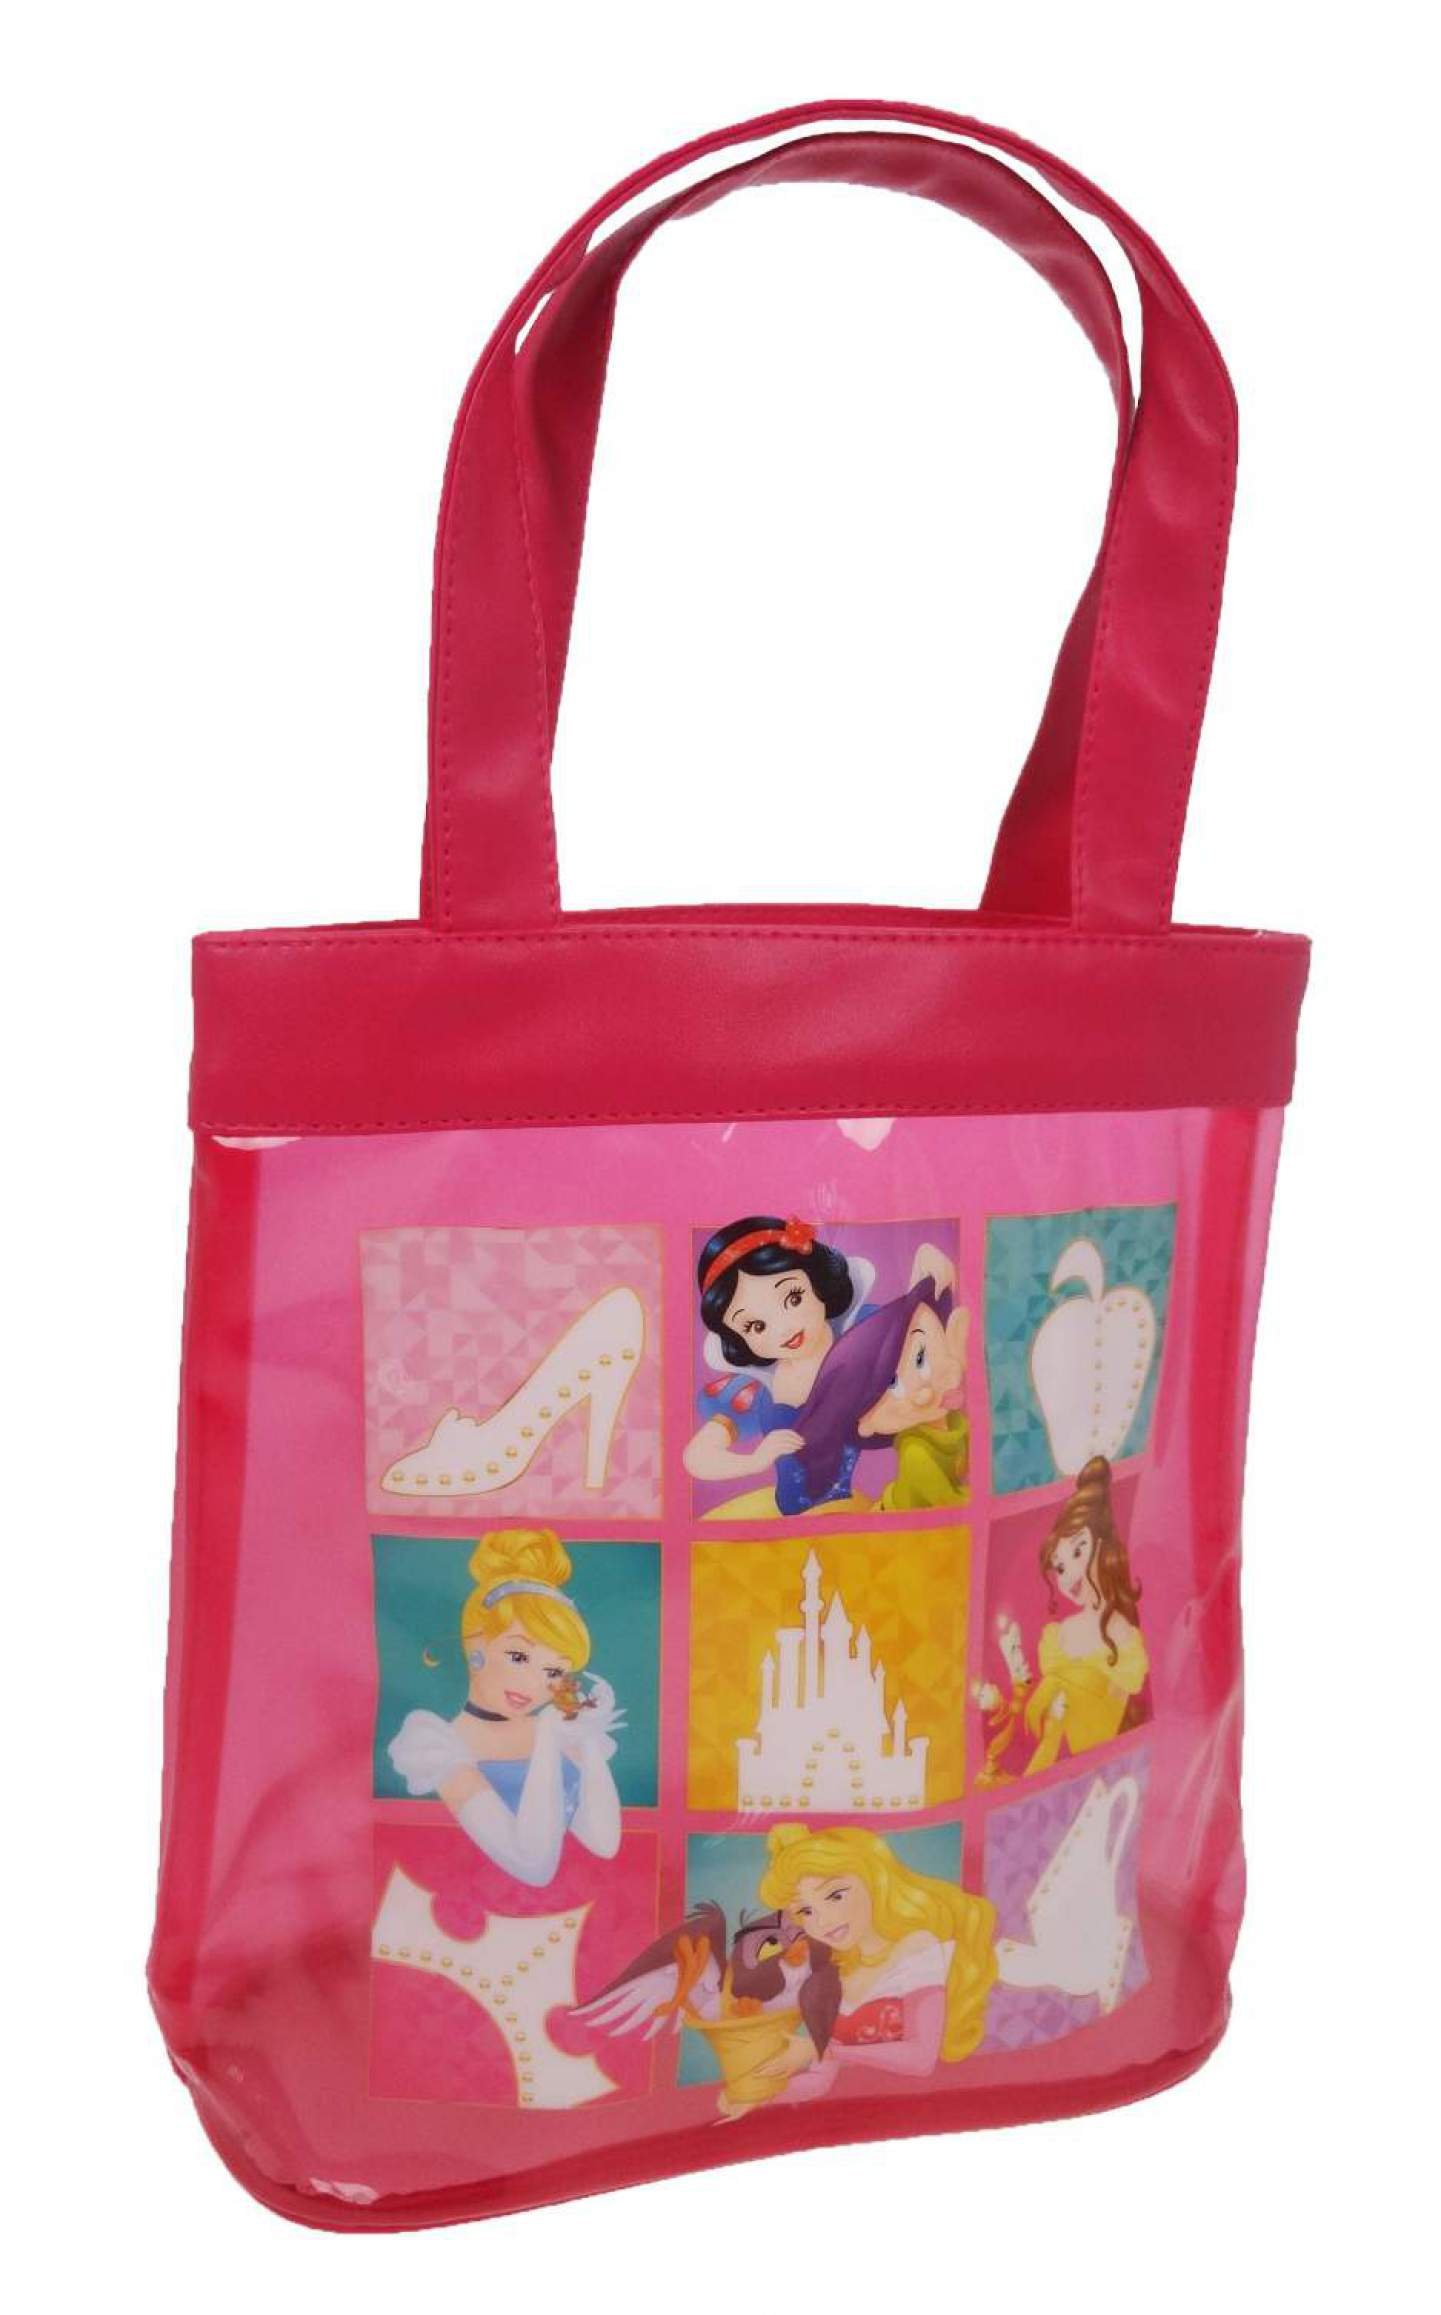 Disney Princess 'Fairytale Friendship' Pvc Tote Bag Shopping Shopper